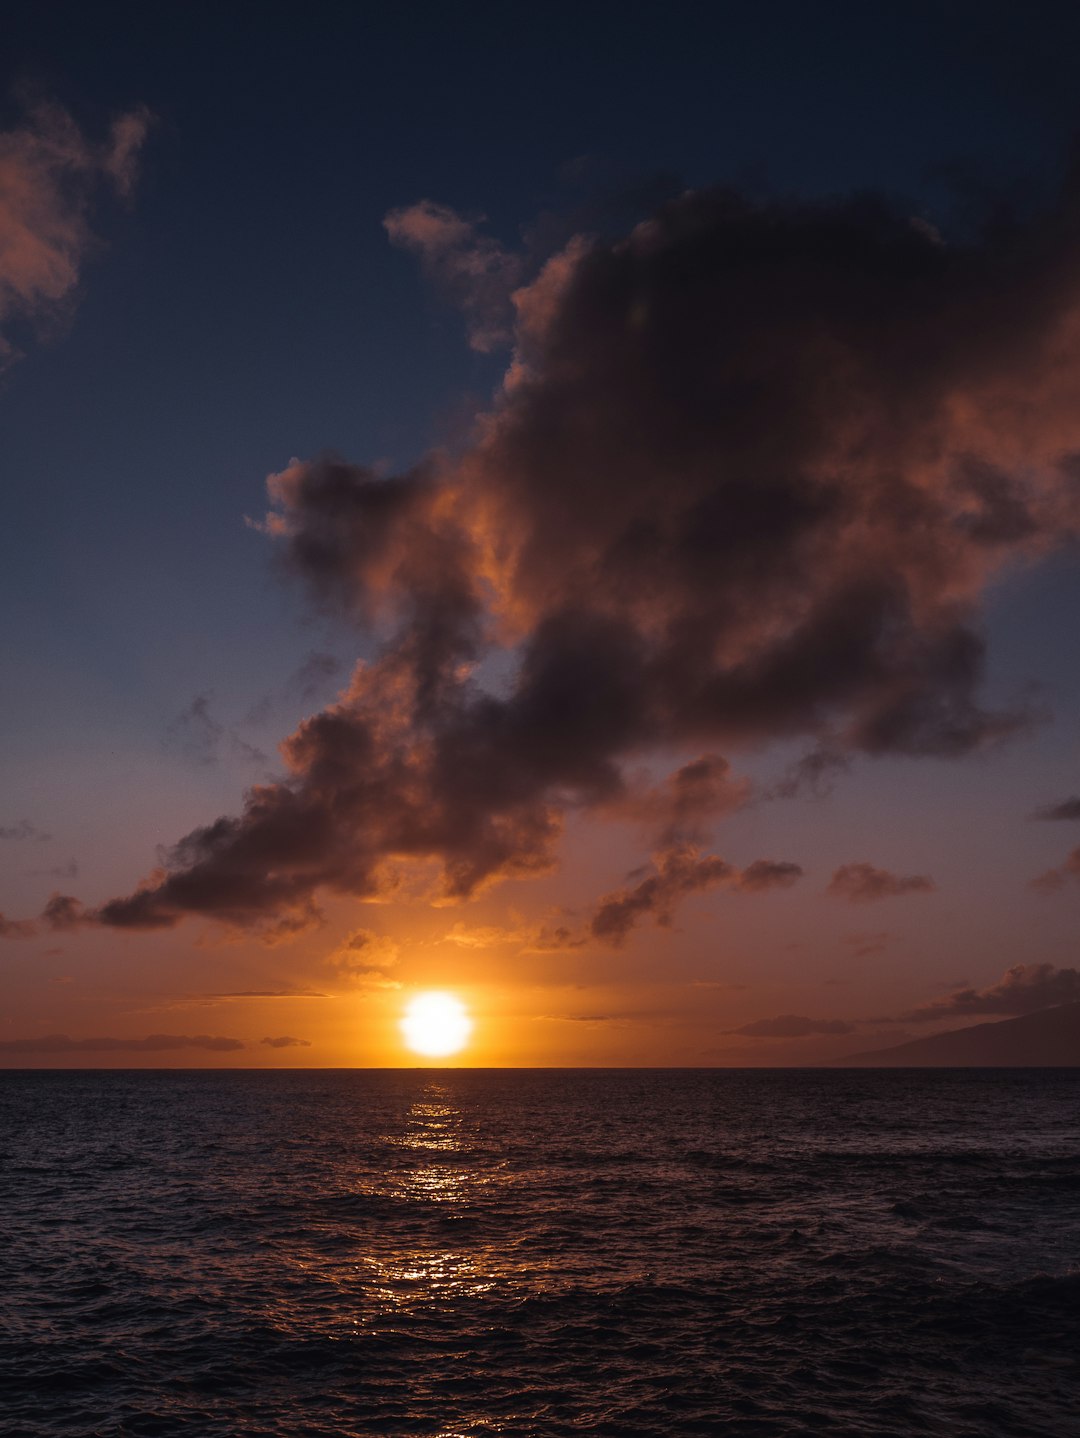 The last moments of sunlight. Maui, Hawaii